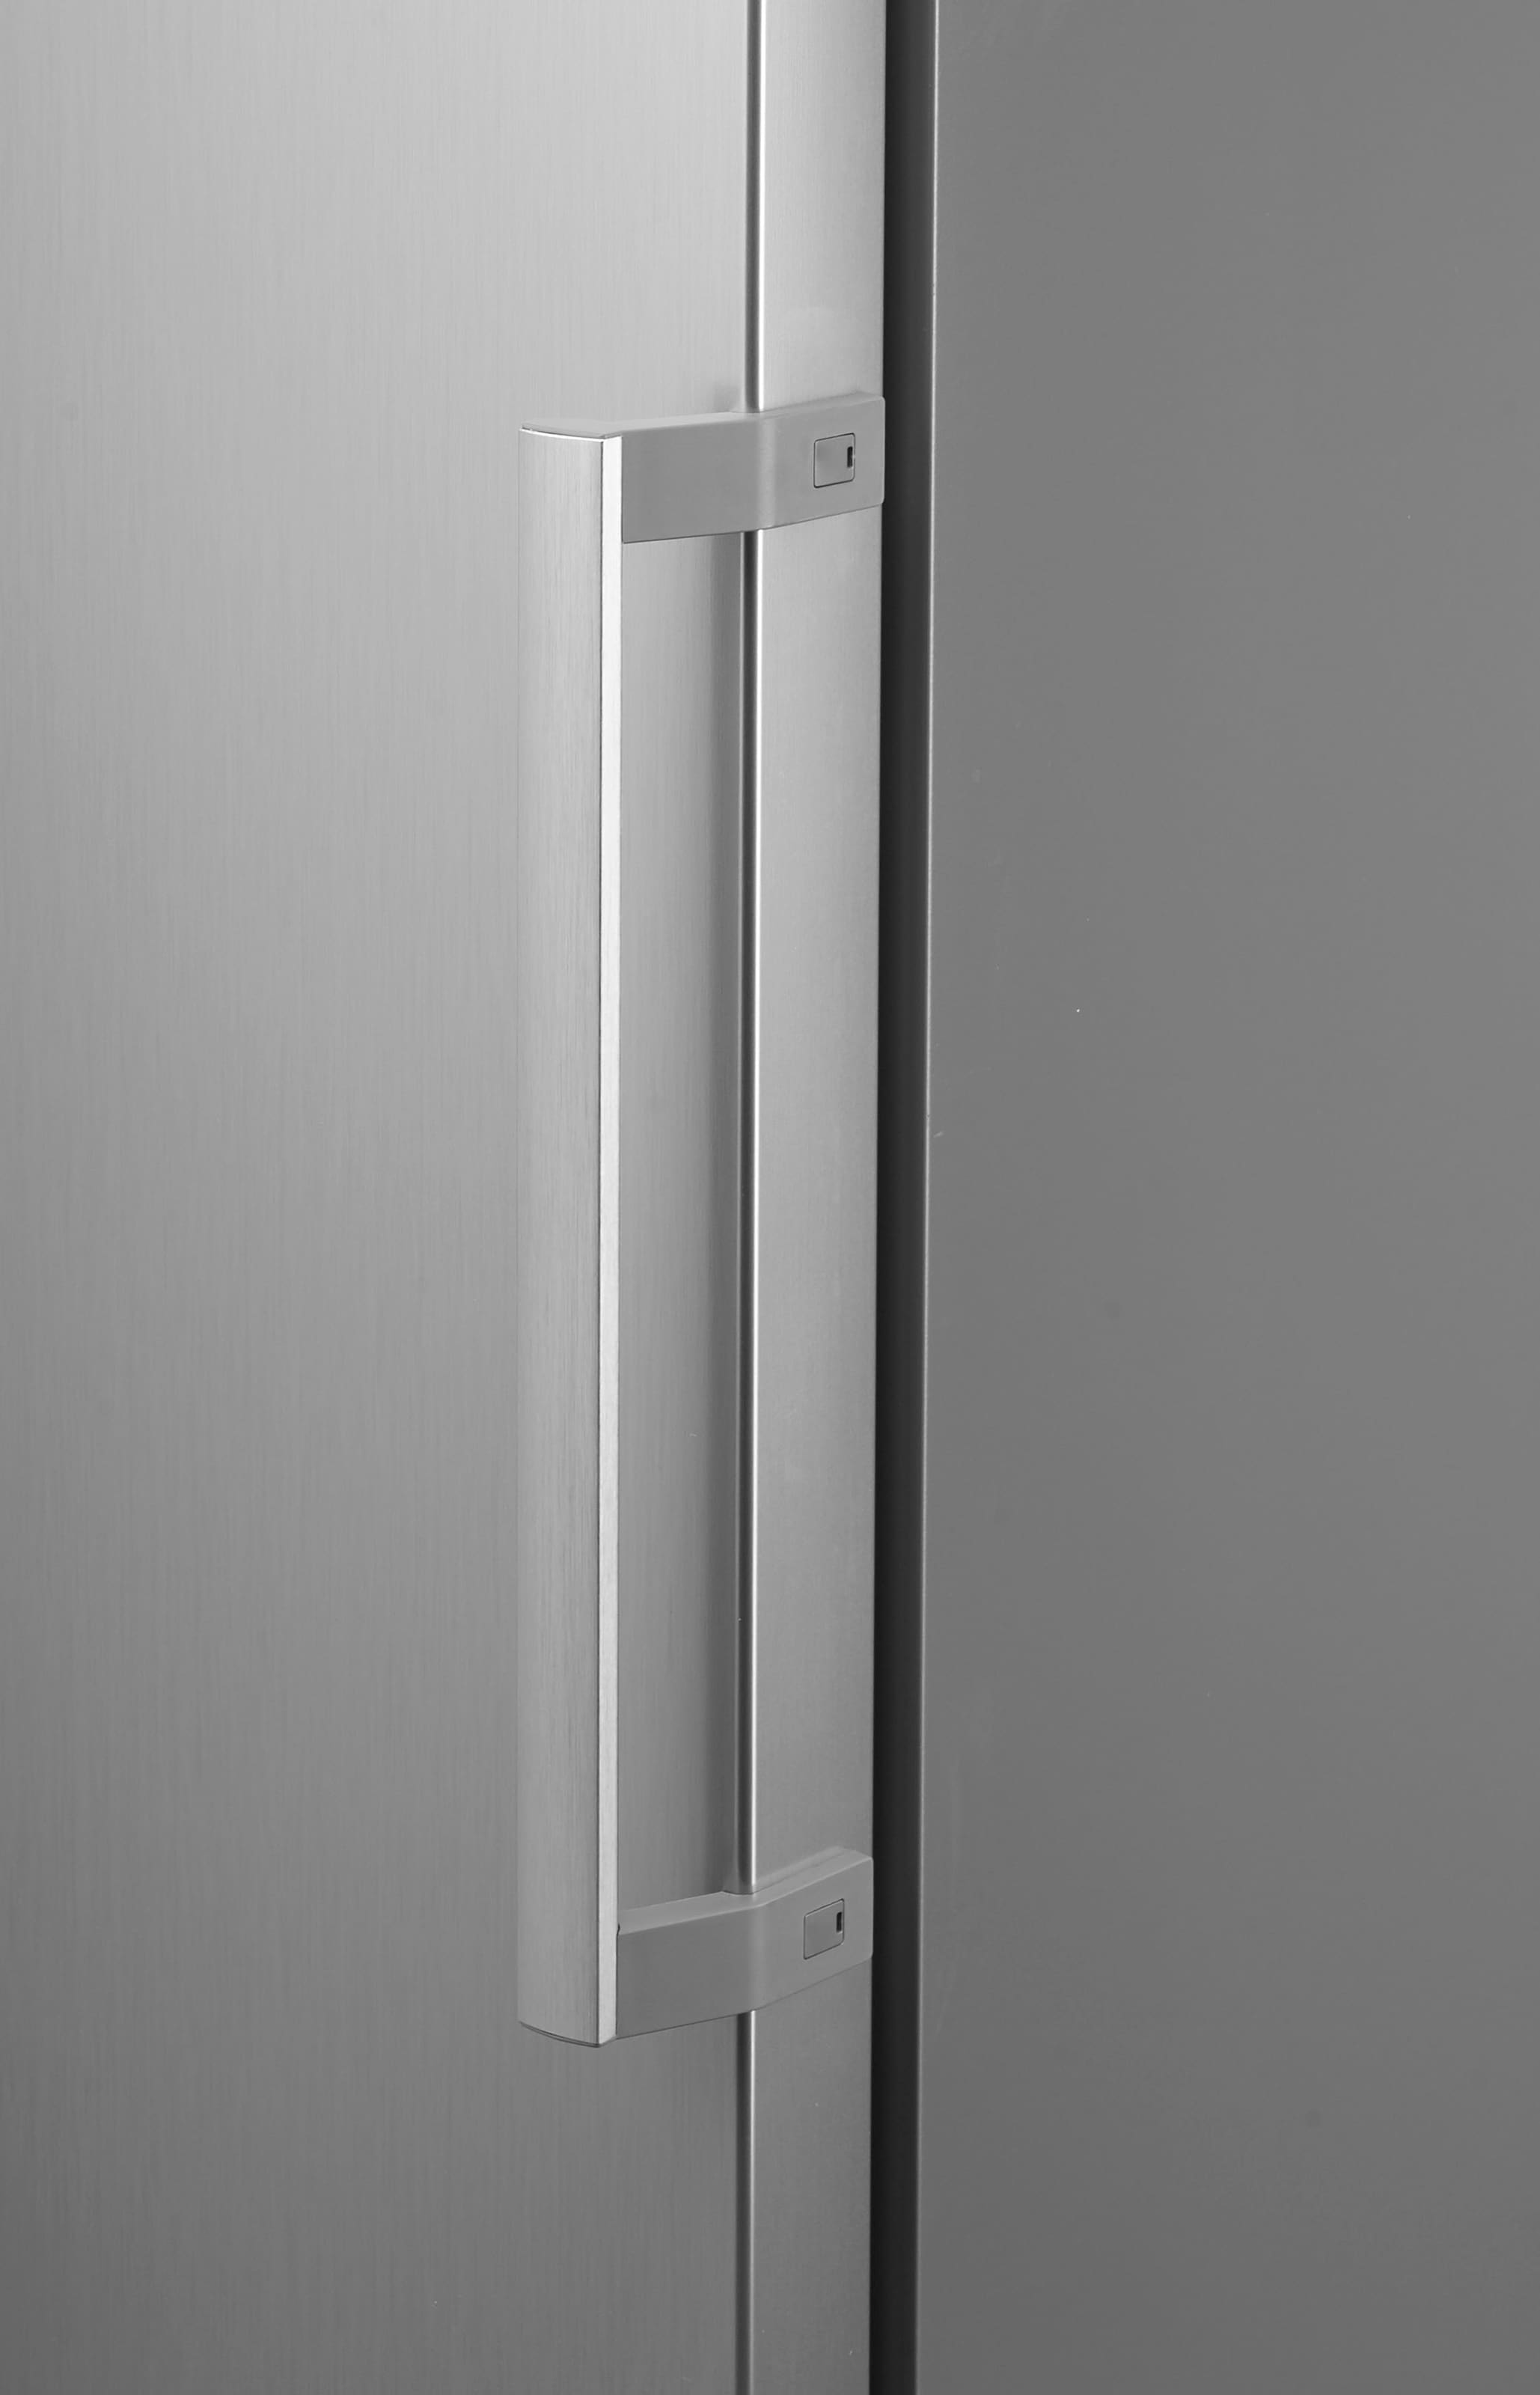 BOSCH Kühlschrank »KSV36VLEP«, KSV36VLEP, 186 cm hoch, 60 cm breit